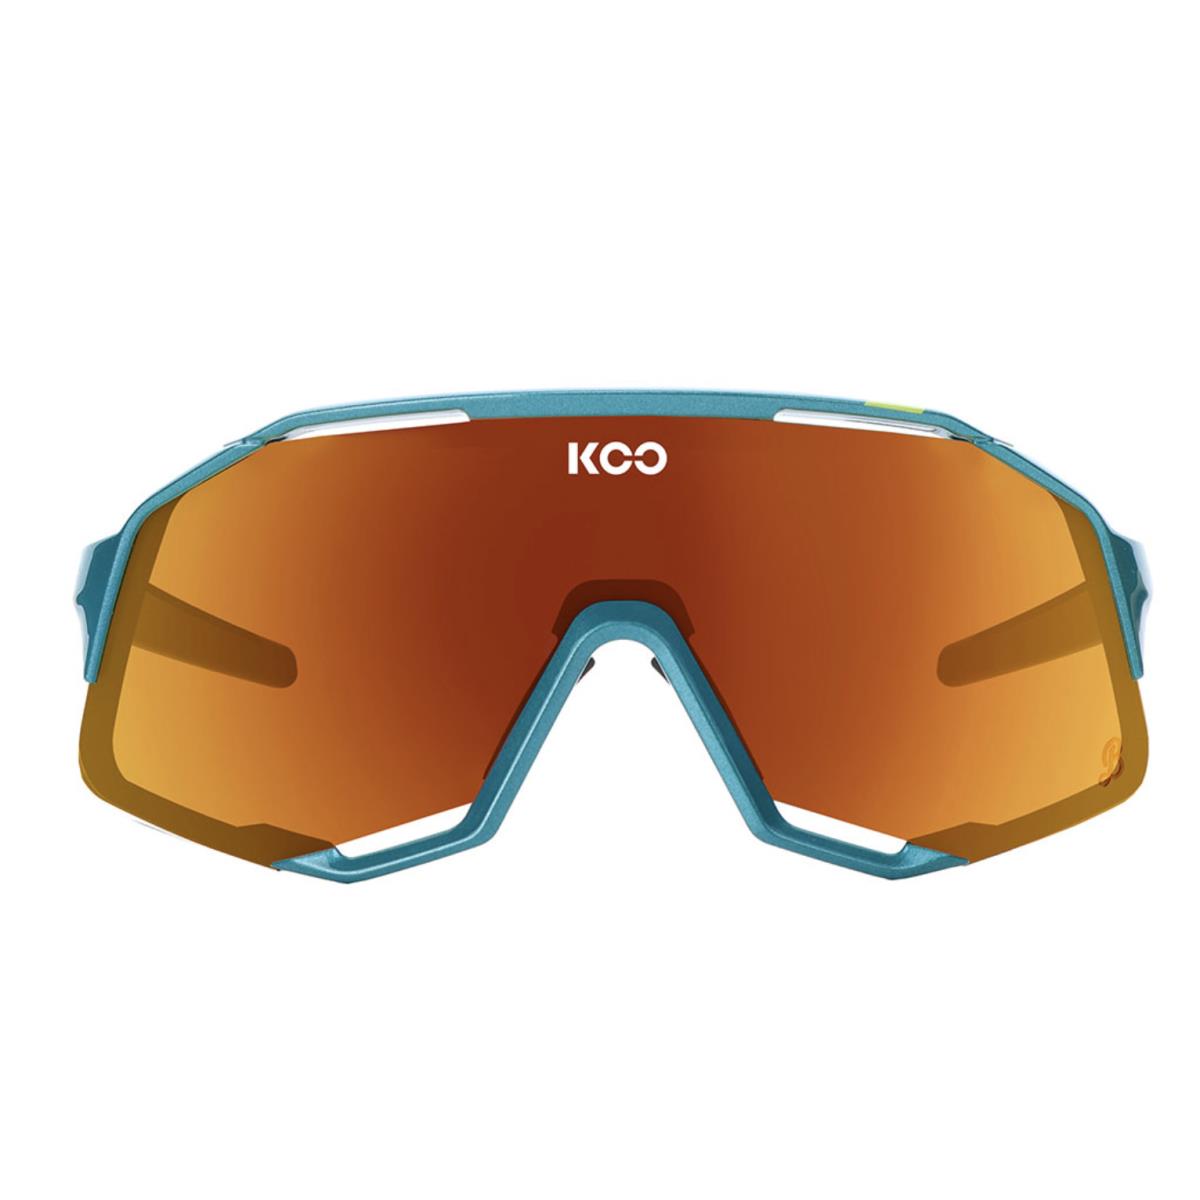 Koo Demos- Sunglasses Zeiss Lens Bora - Hansgrohe Green w Rid Mirror Lens